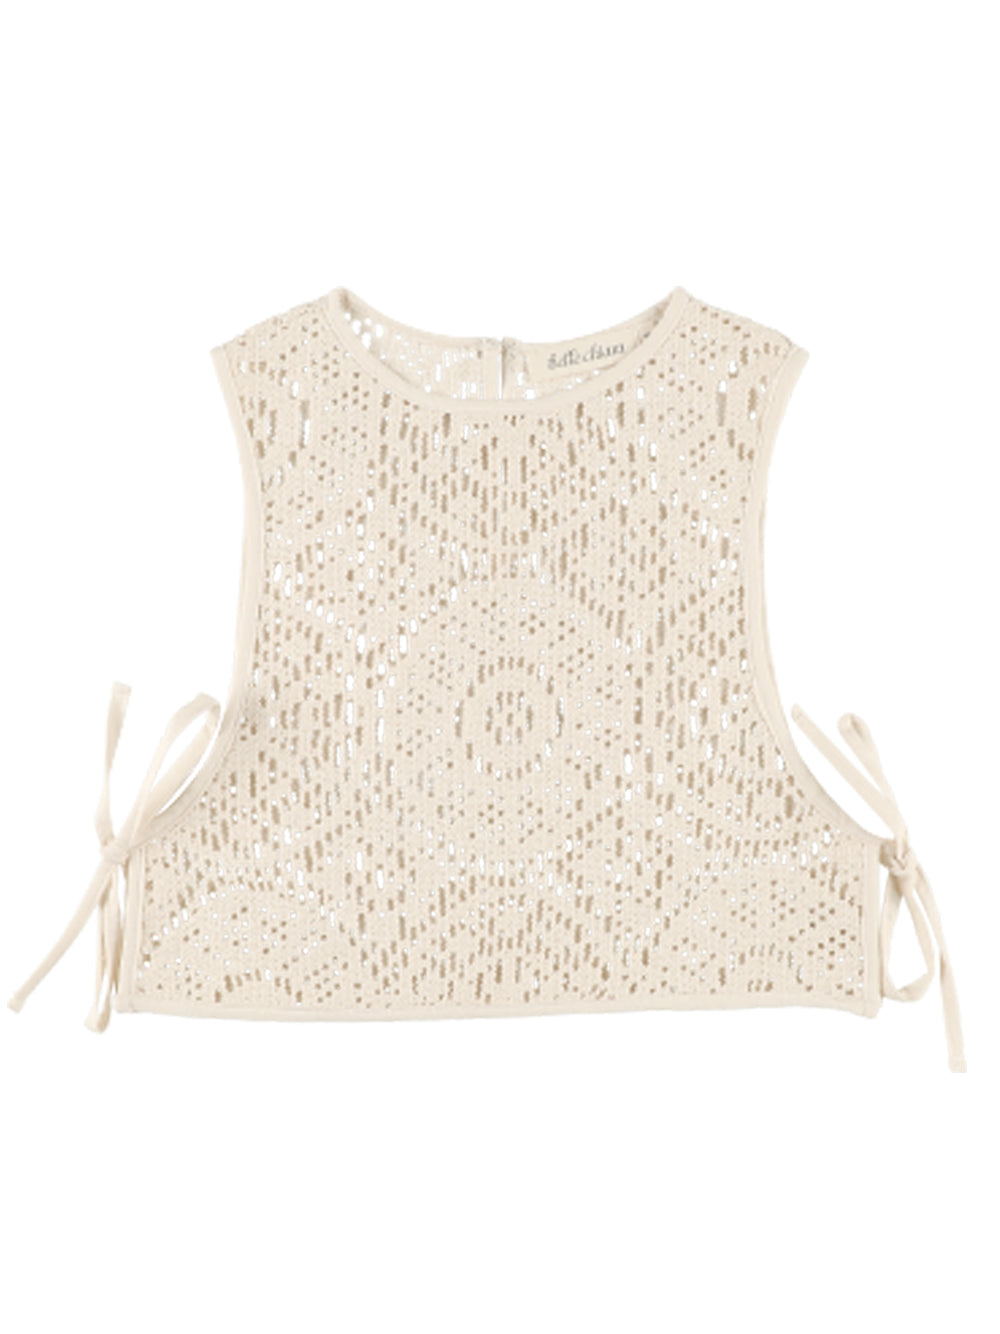 PREORDER: Sleeveless Crochet Top